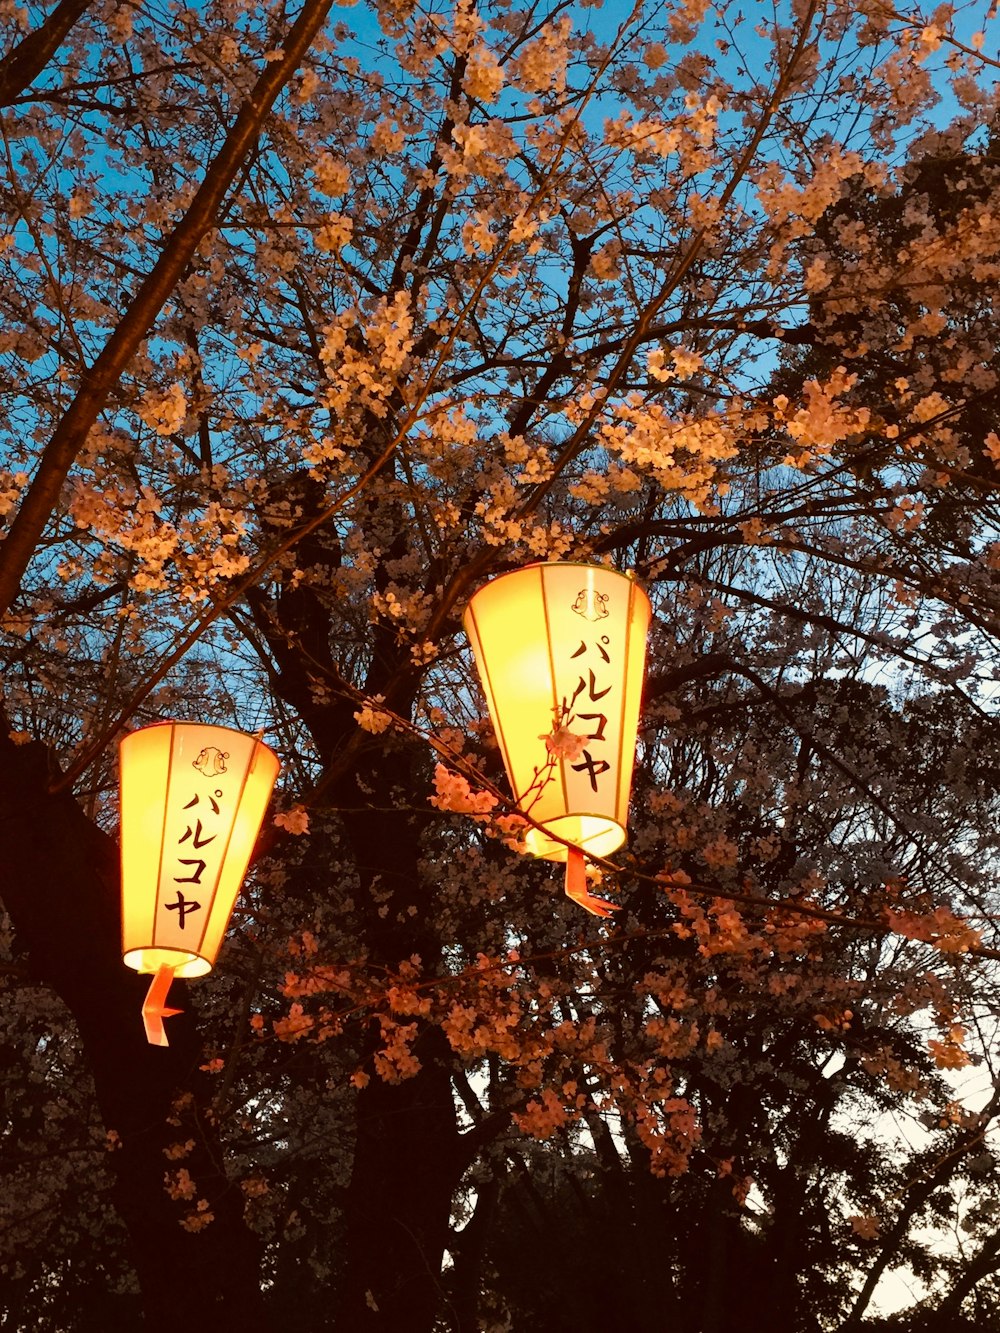 yellow street light near brown tree during daytime